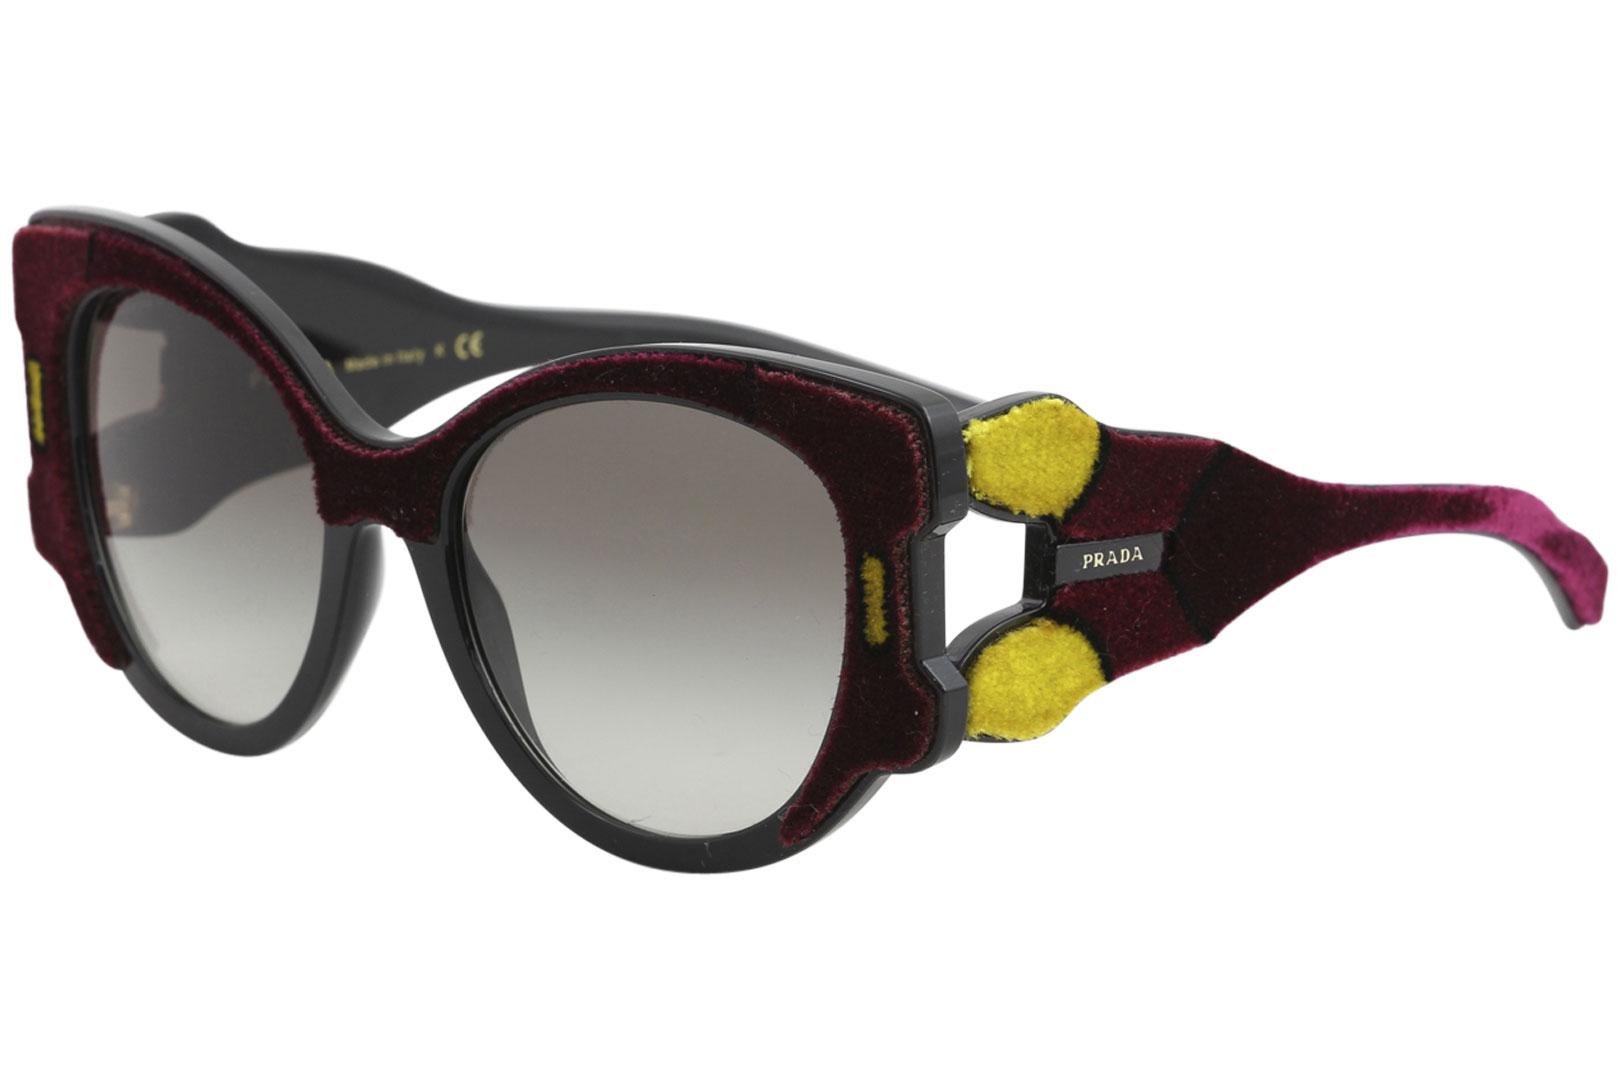 Prada Women's SPR10U SPR/10U Fashion Square Sunglasses - Bordeaux Yellow Brown/Grey Gradient   I7Y/0A7 - Lens 54 Bridge 19 B 49.2 ED 60.4 Temple 140mm